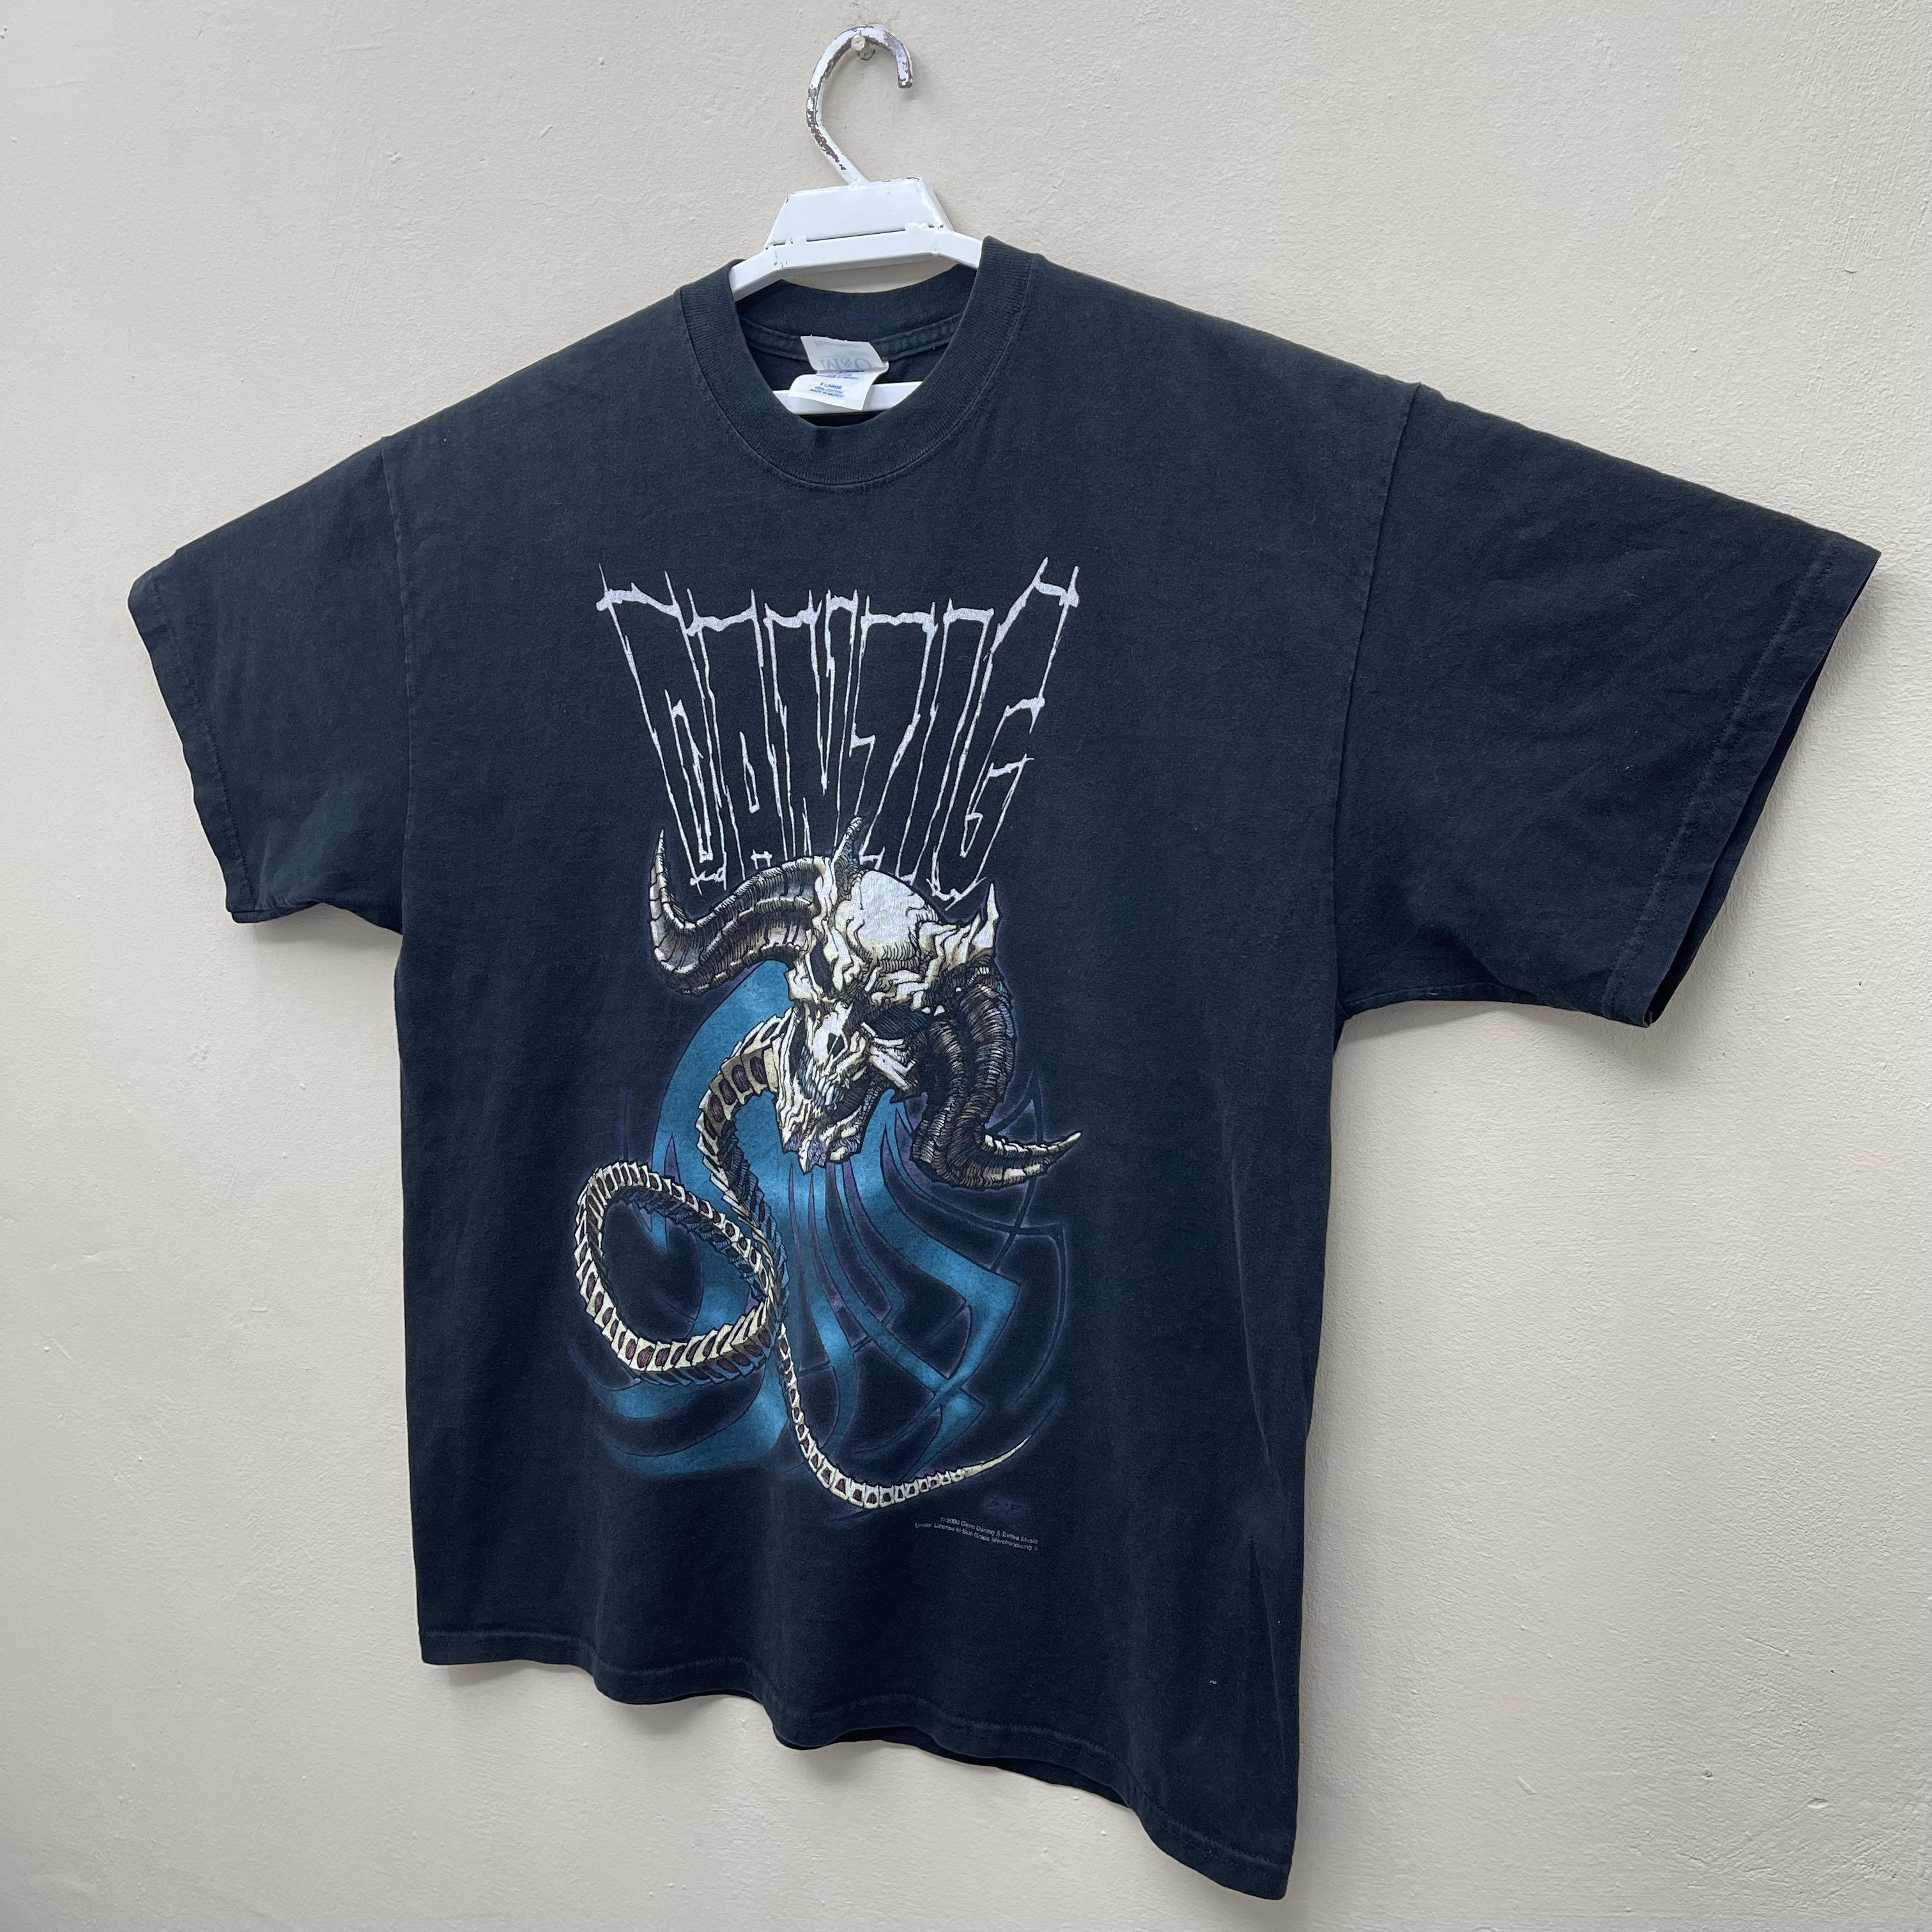 Vintage 2000 Danzig Shirt Concert Shirt Band Tee Danzig Tee The Misfits Shirt Misfits Tee DANZIG Shirt Size Xlarge - 4